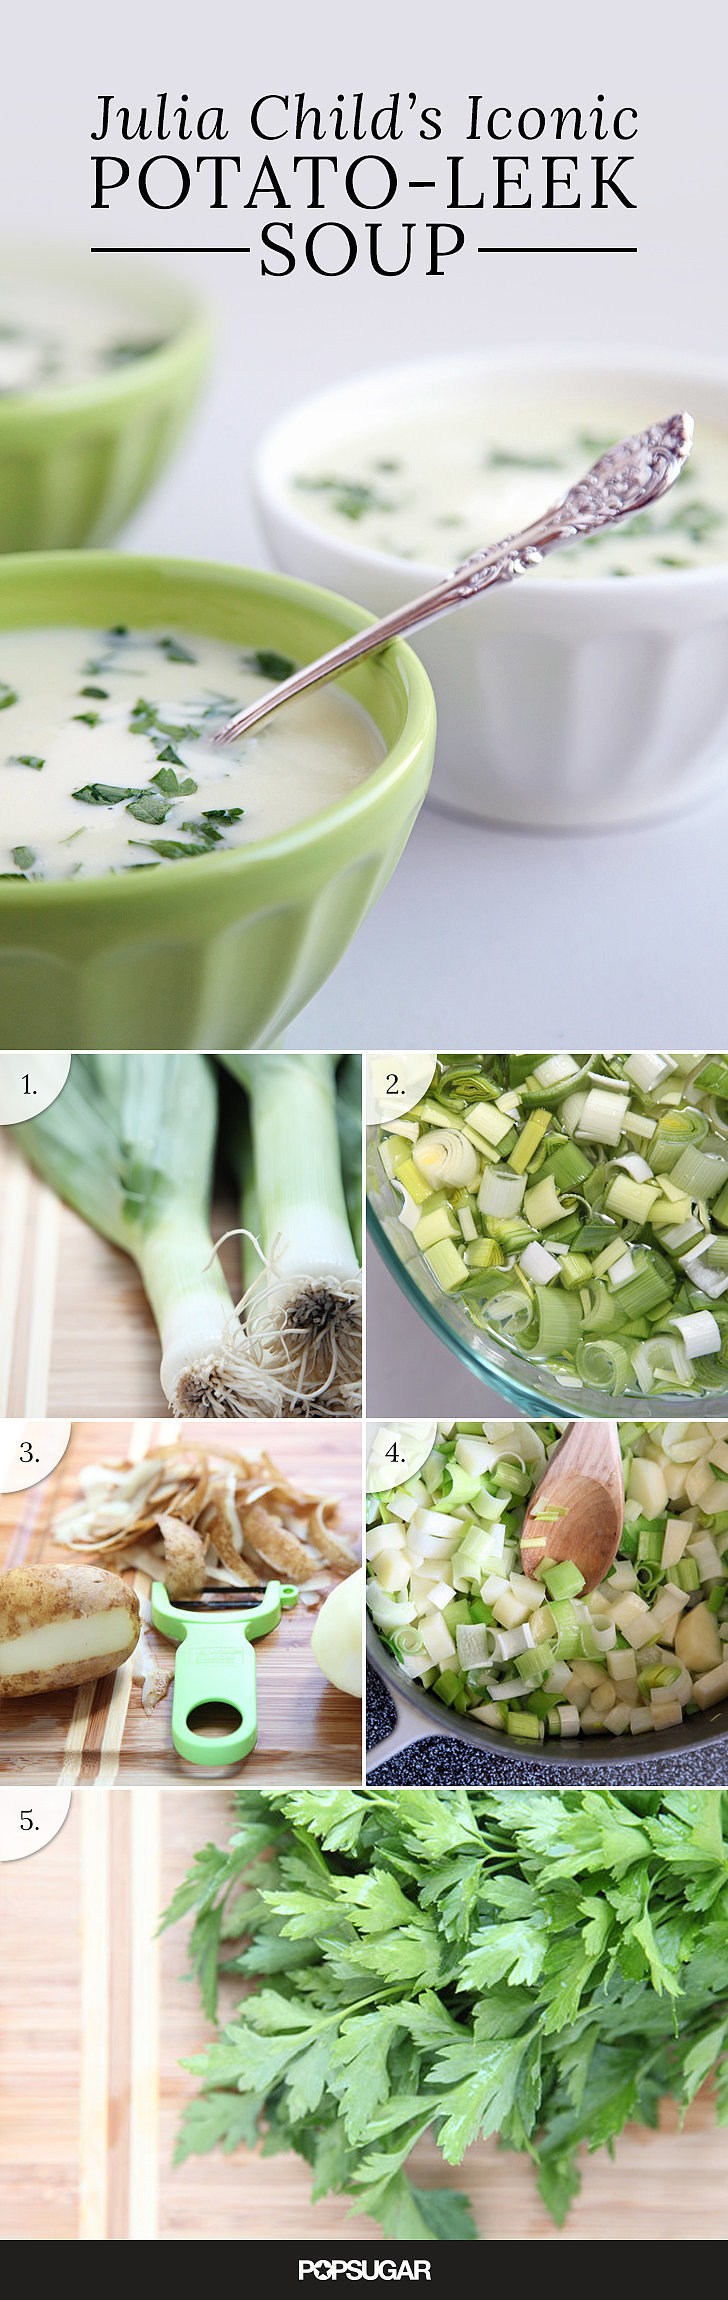 Julia Child's Potato Leek Soup Recipe | POPSUGAR Food